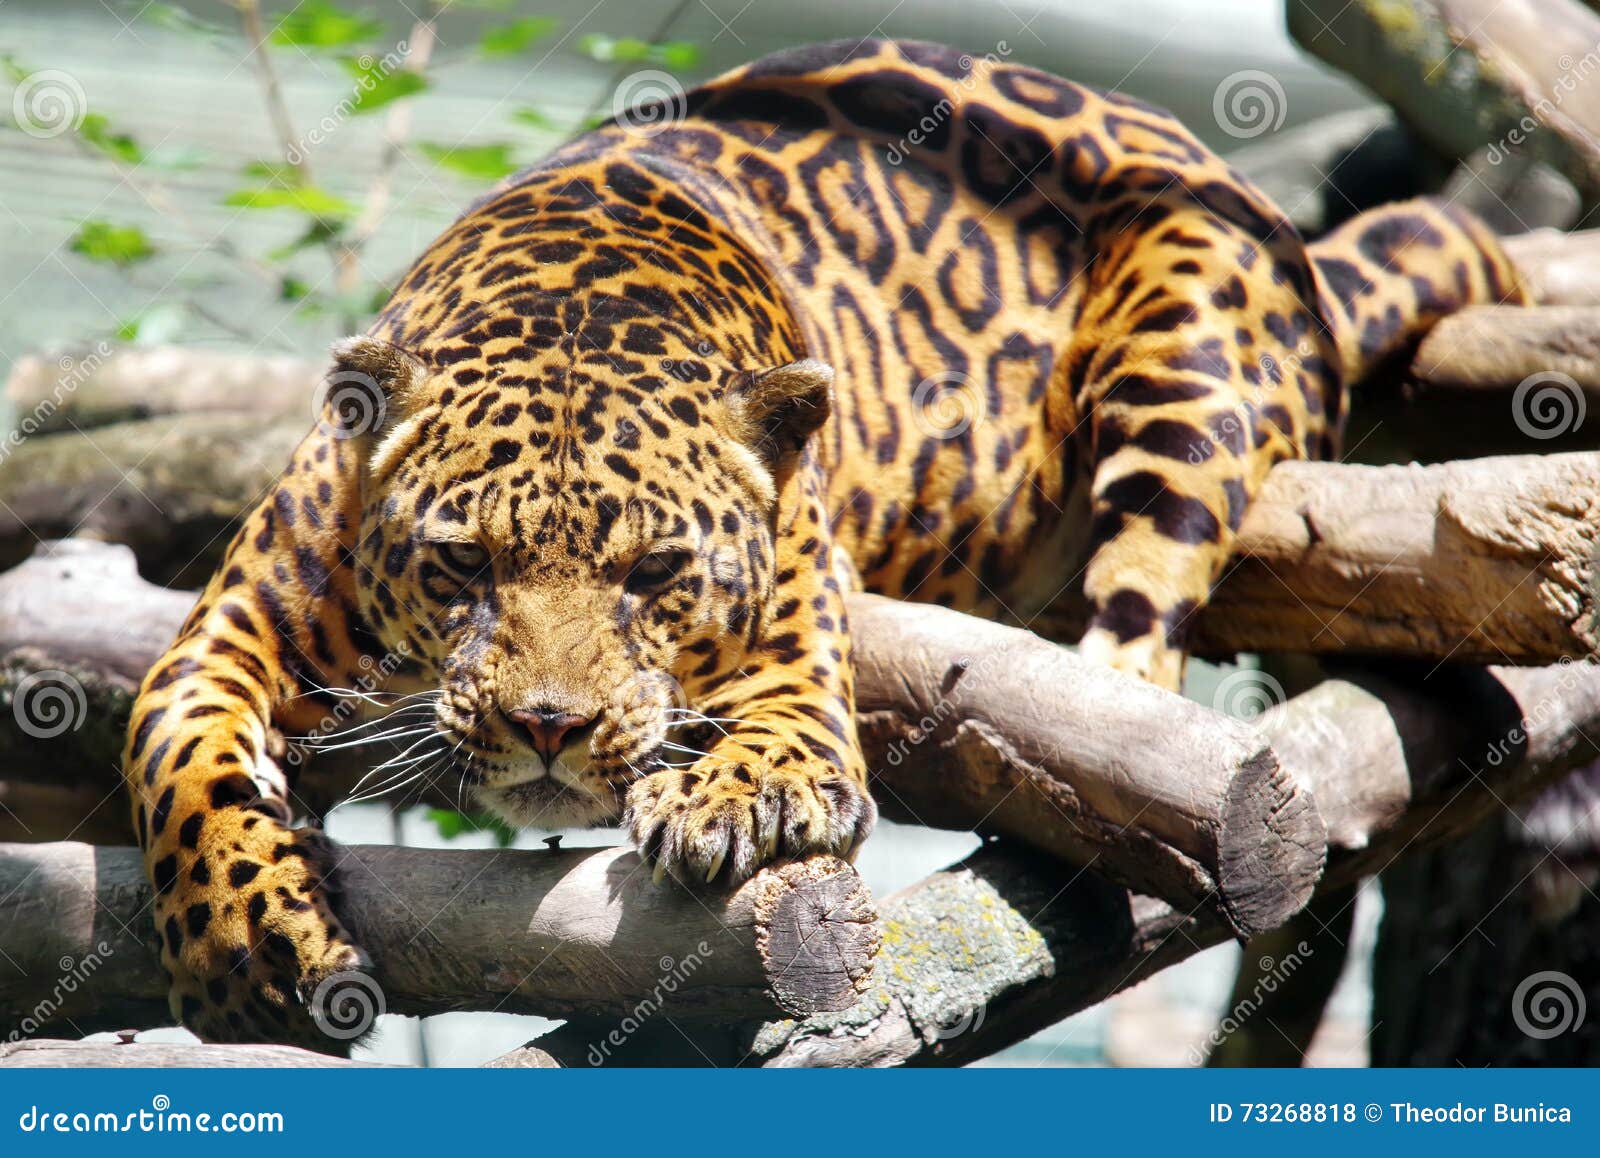 wild animal. feline. leopard